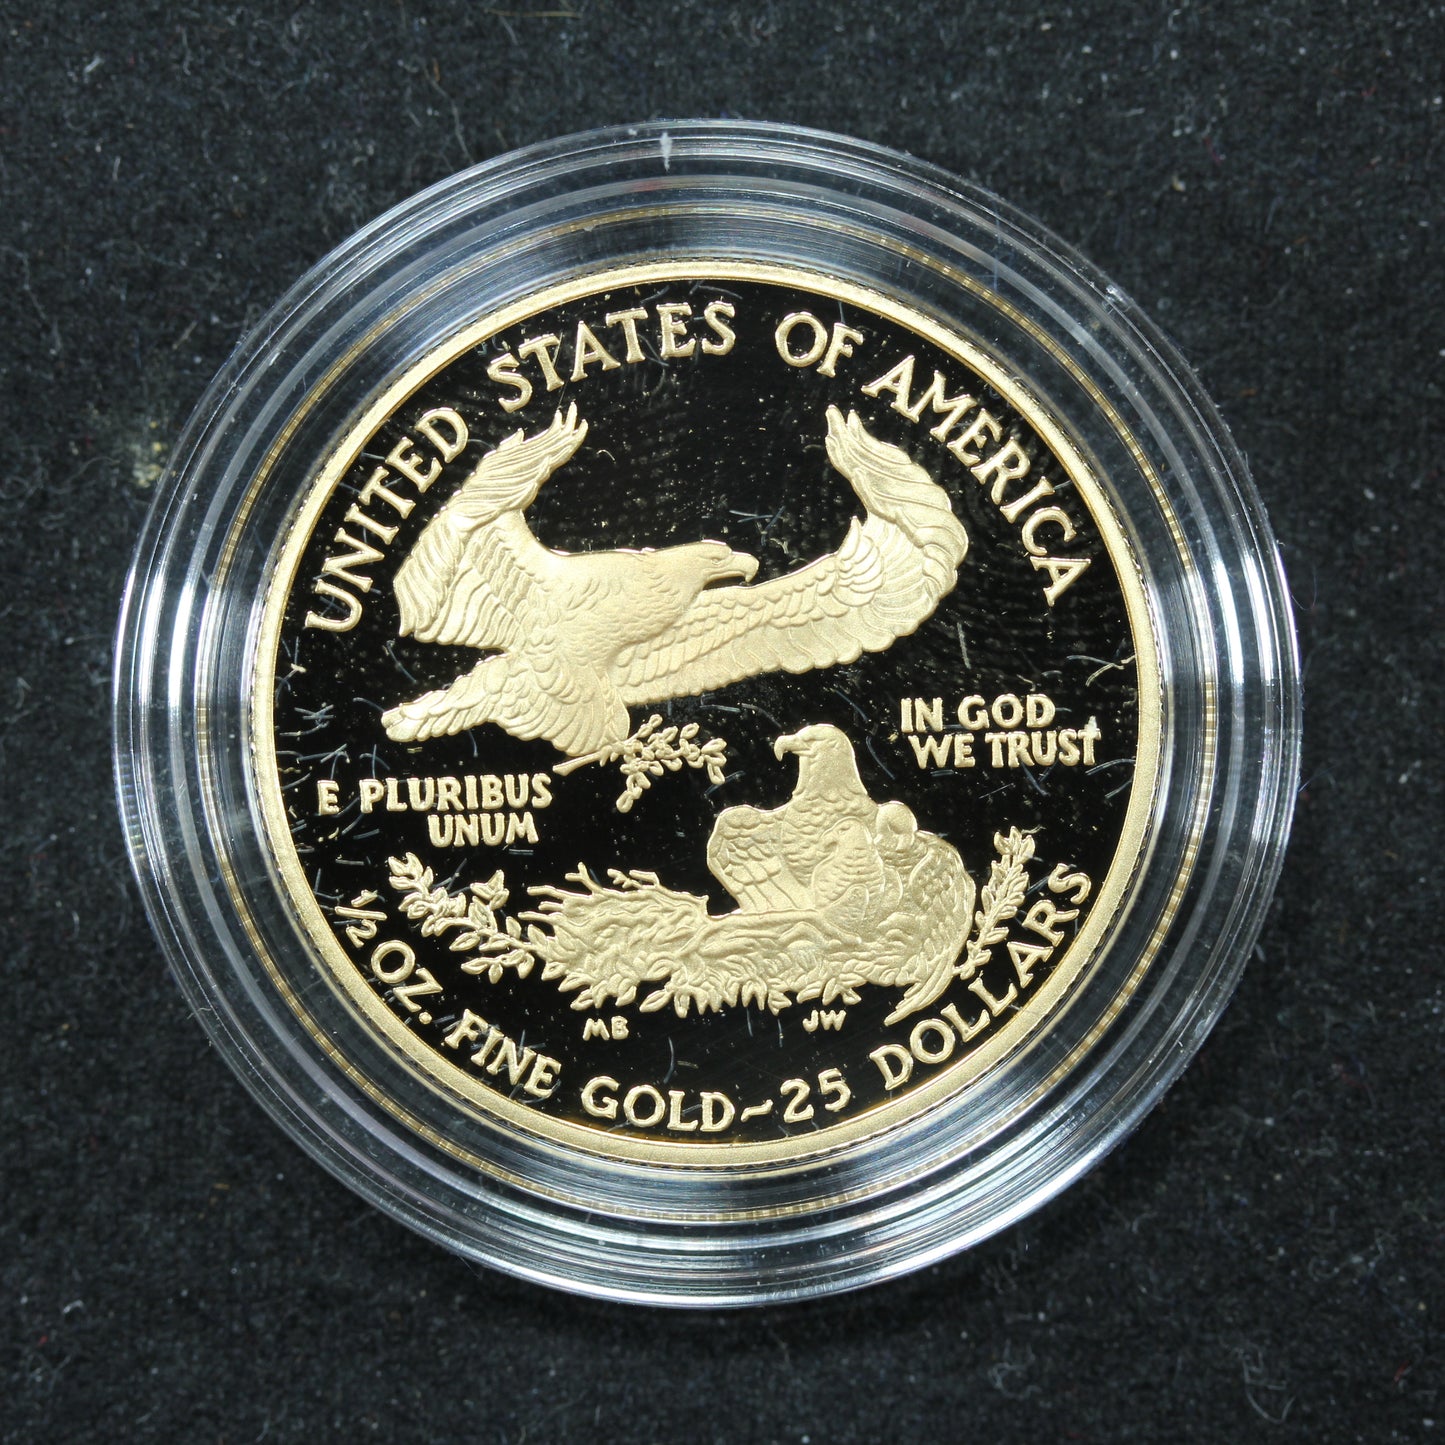 2007 4-Coin American Gold Eagle Proof Set (w/Box & COA)